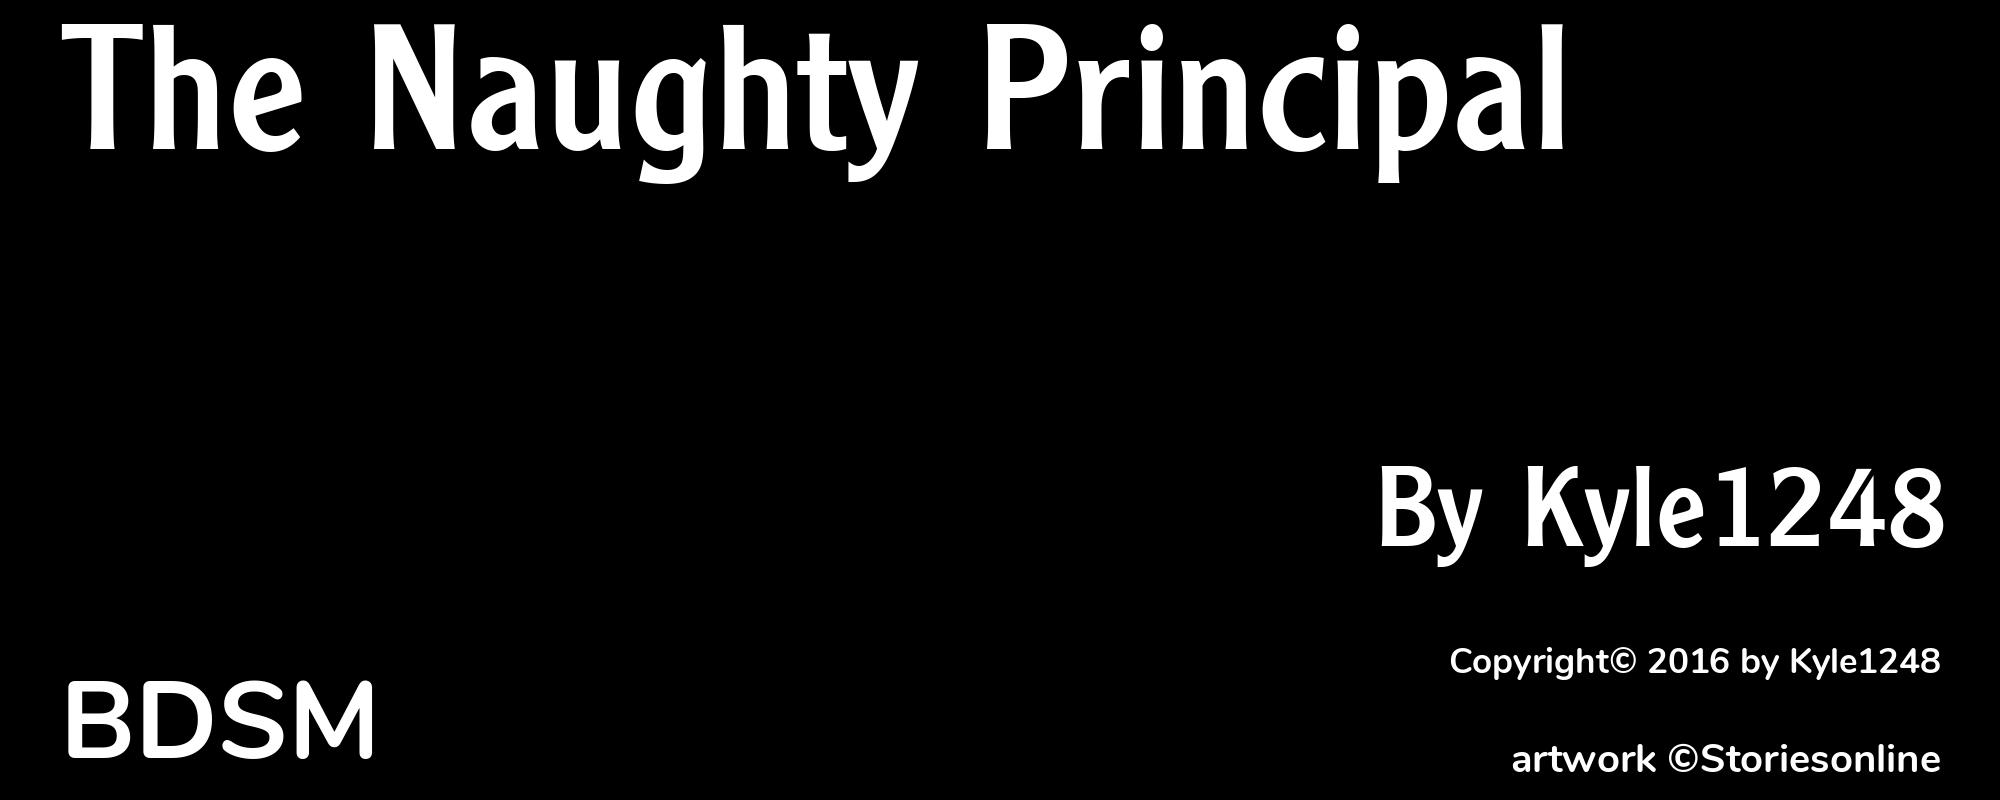 The Naughty Principal - Cover